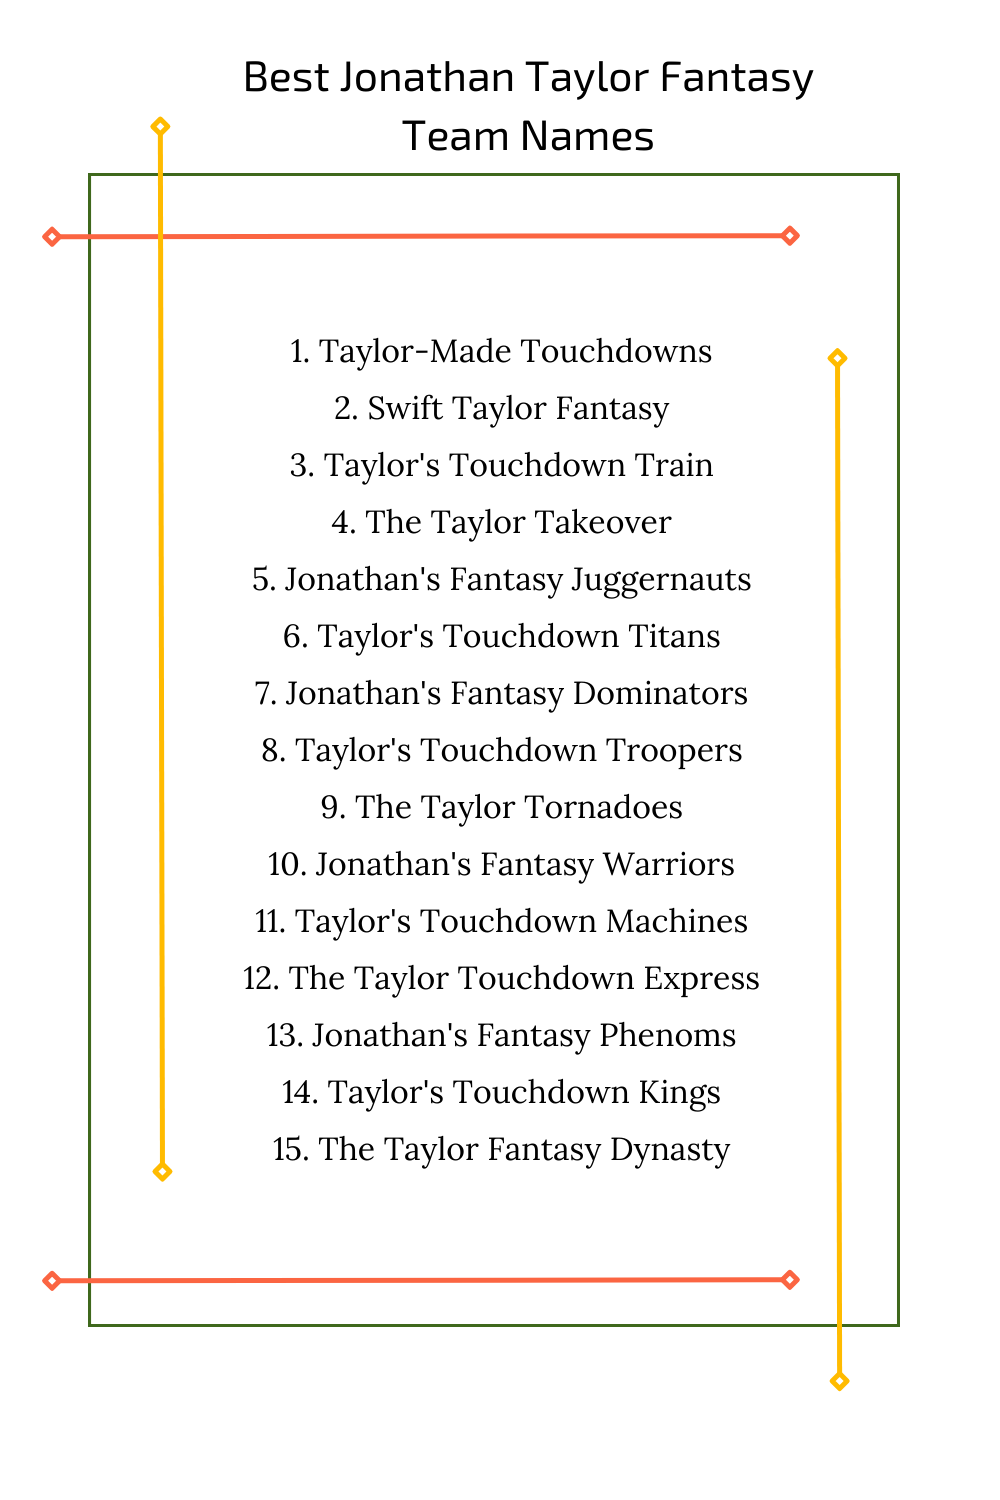 Best Jonathan Taylor Fantasy Team Names